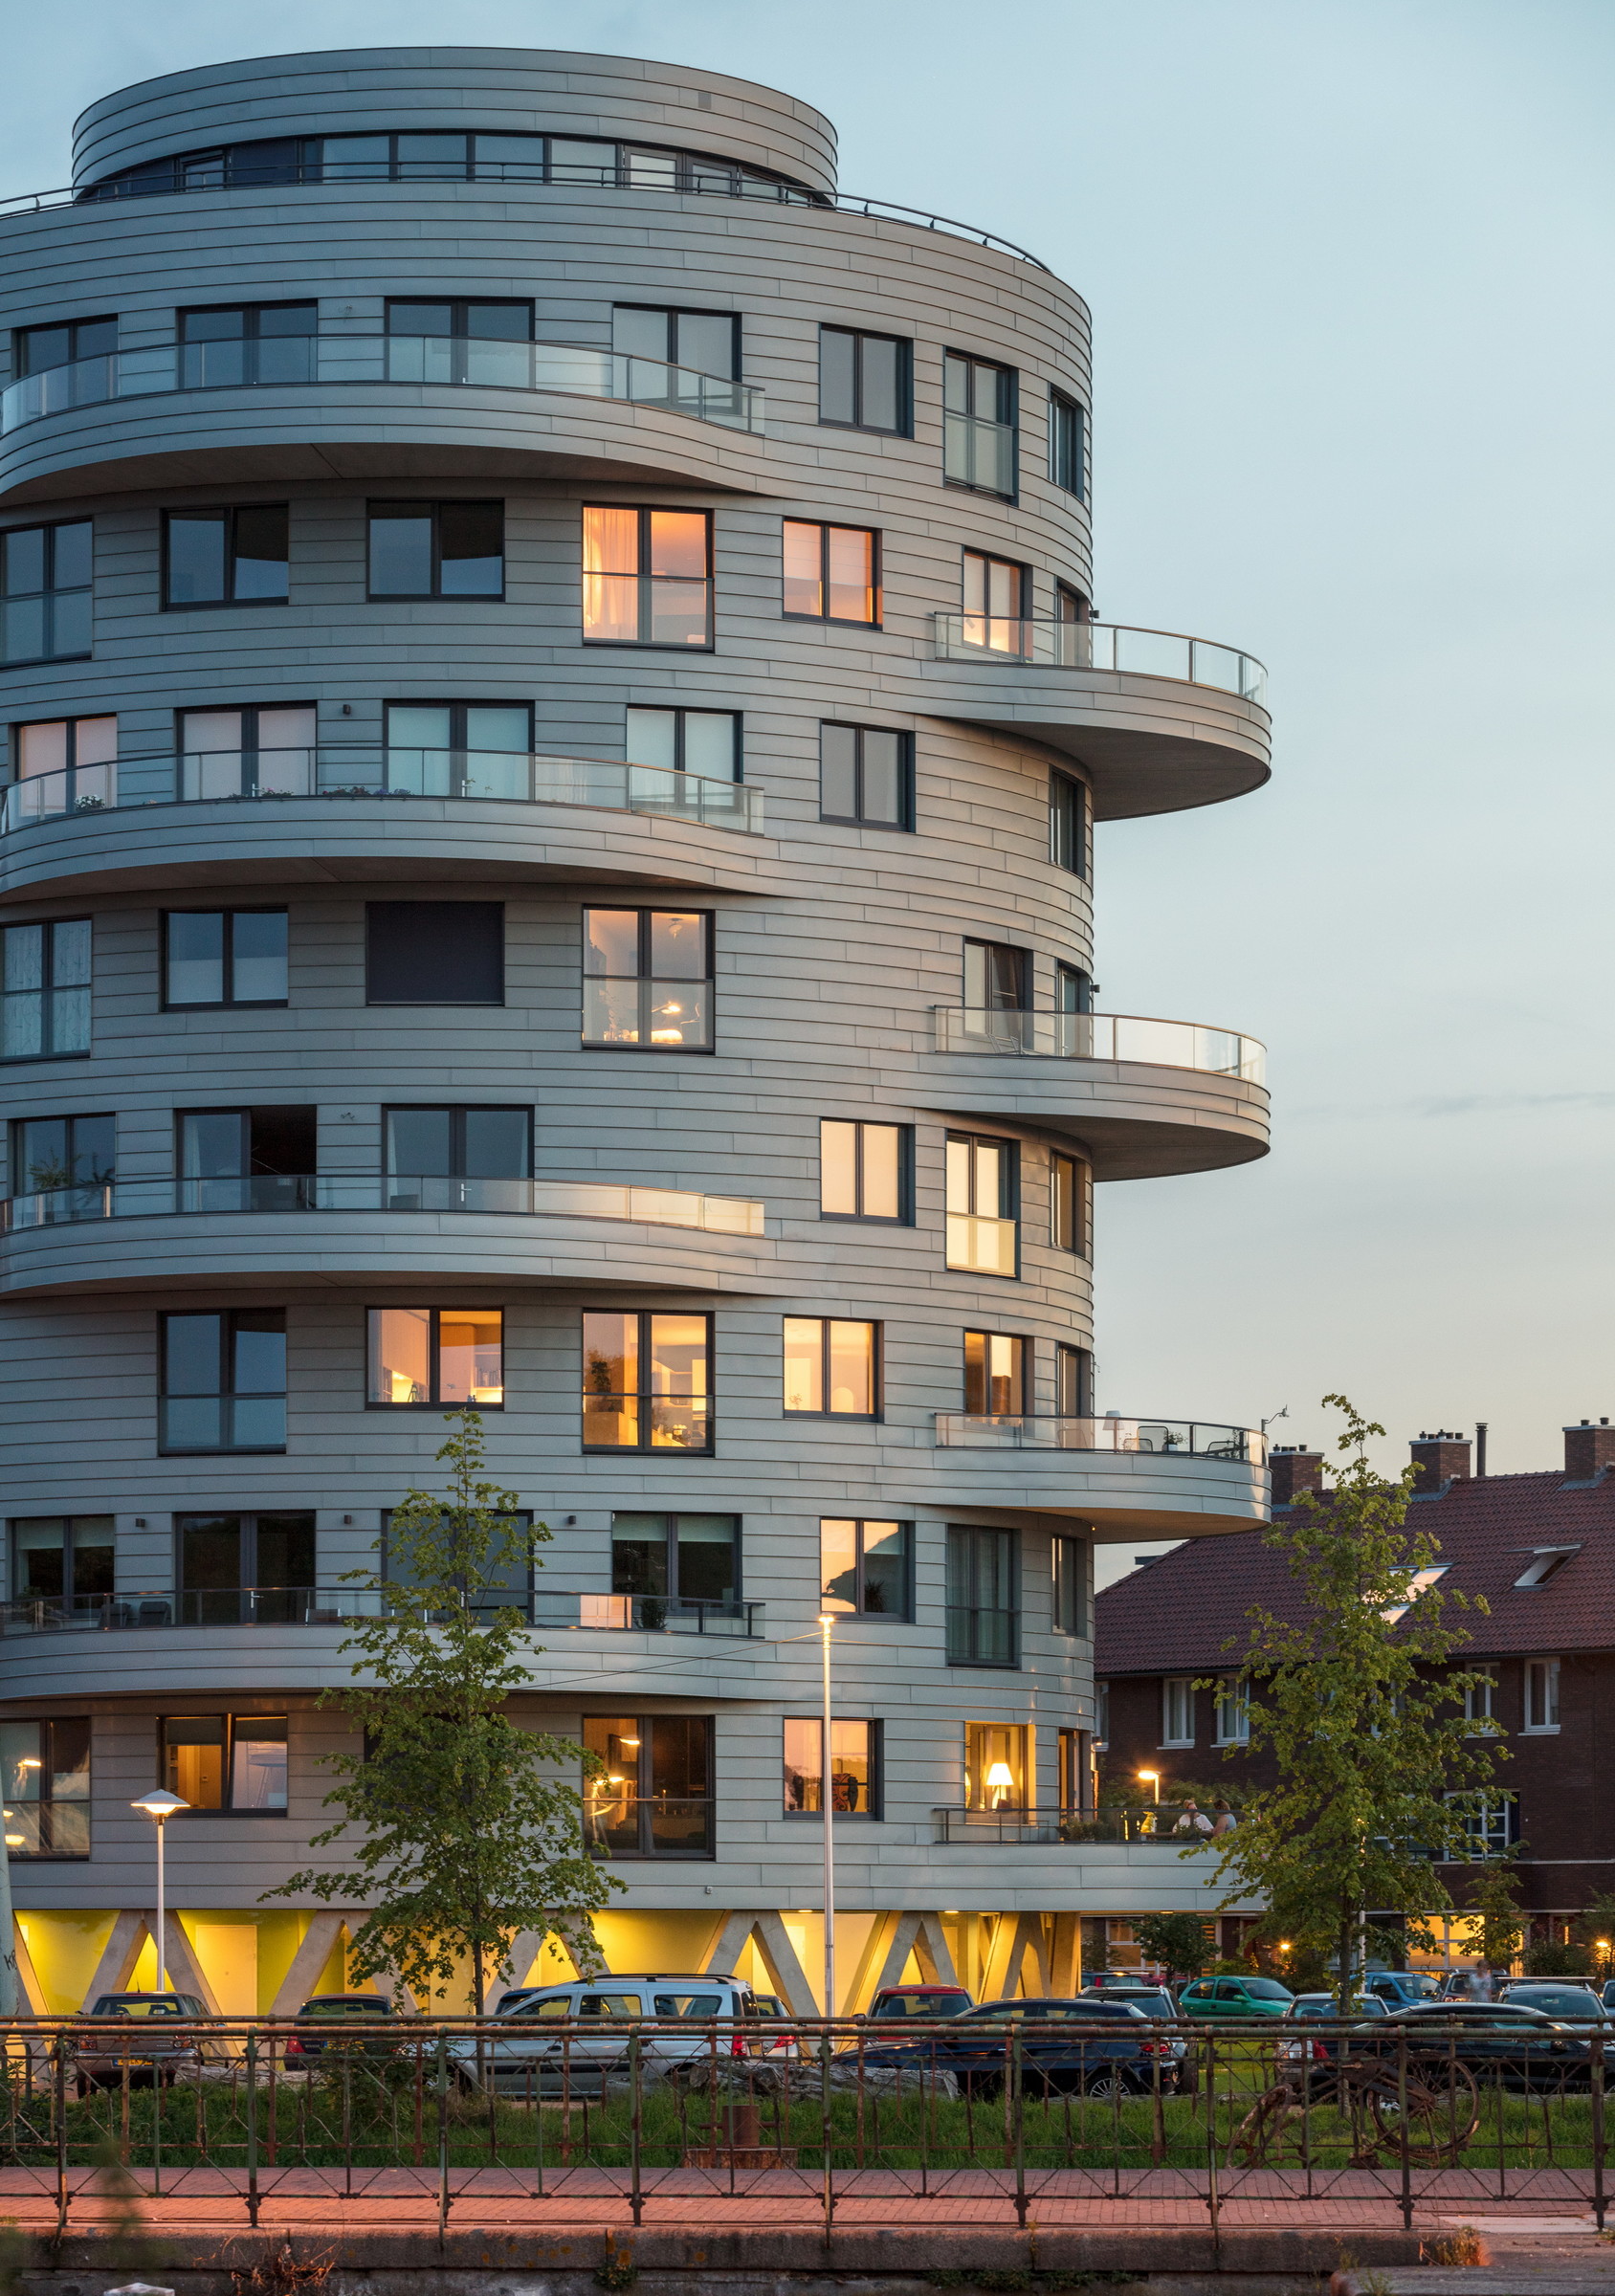 Meysters-Buiten-Zecc-round_plan-apartments-zinc-08.JPG